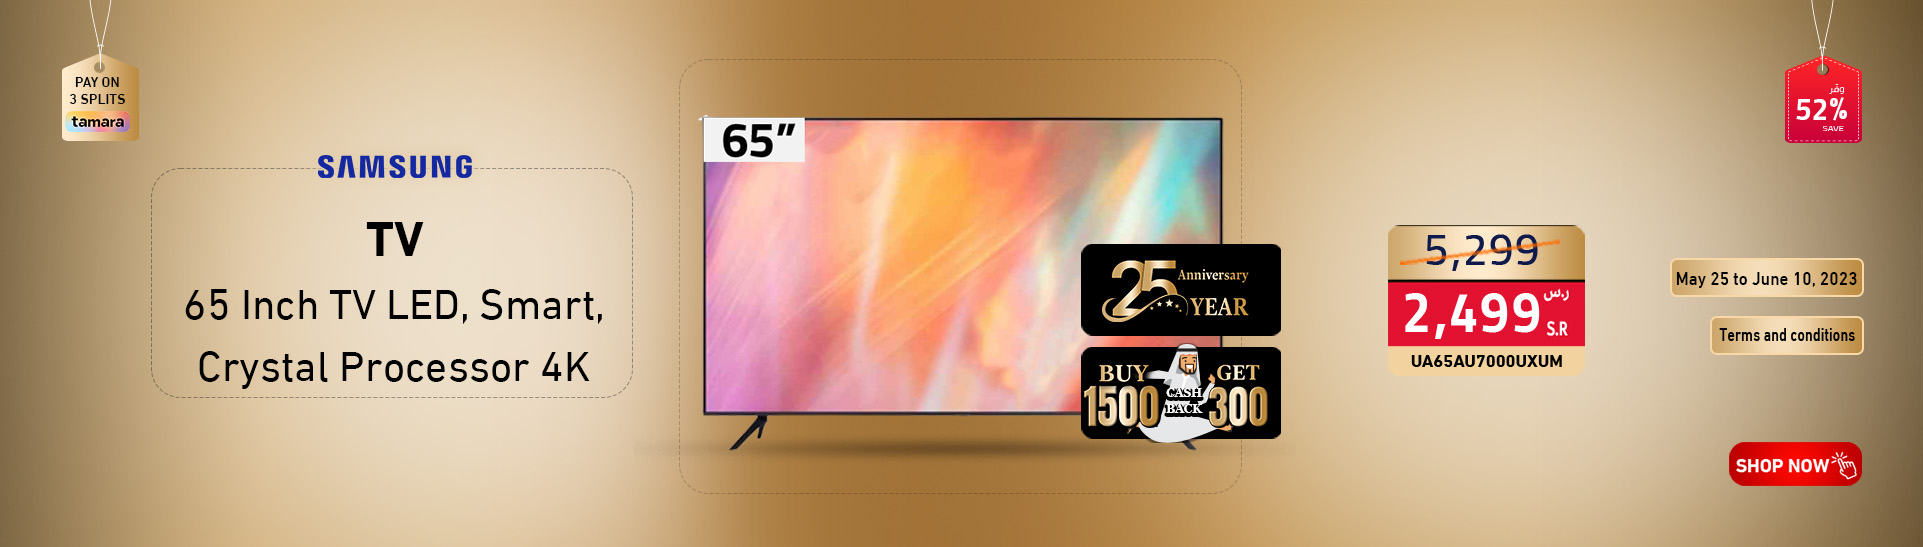 Samsung 65 Inch TV LED, Smart, Crystal Processor